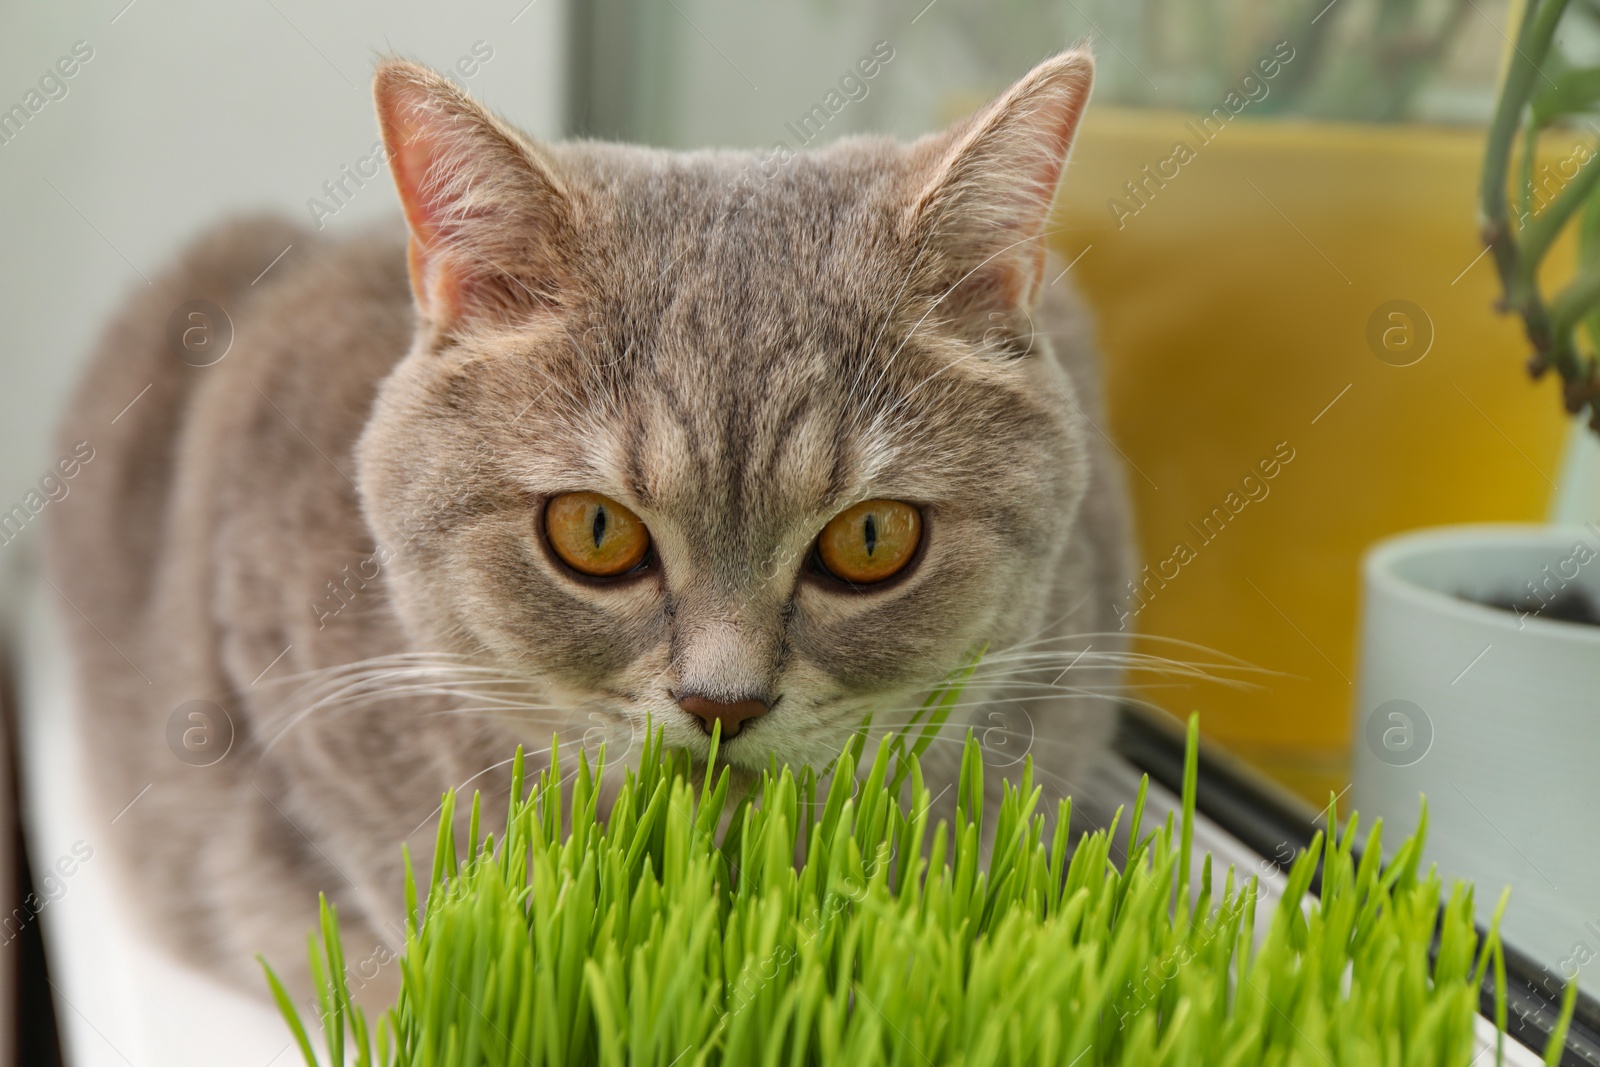 Photo of Cute cat near fresh green grass on windowsill indoors, closeup